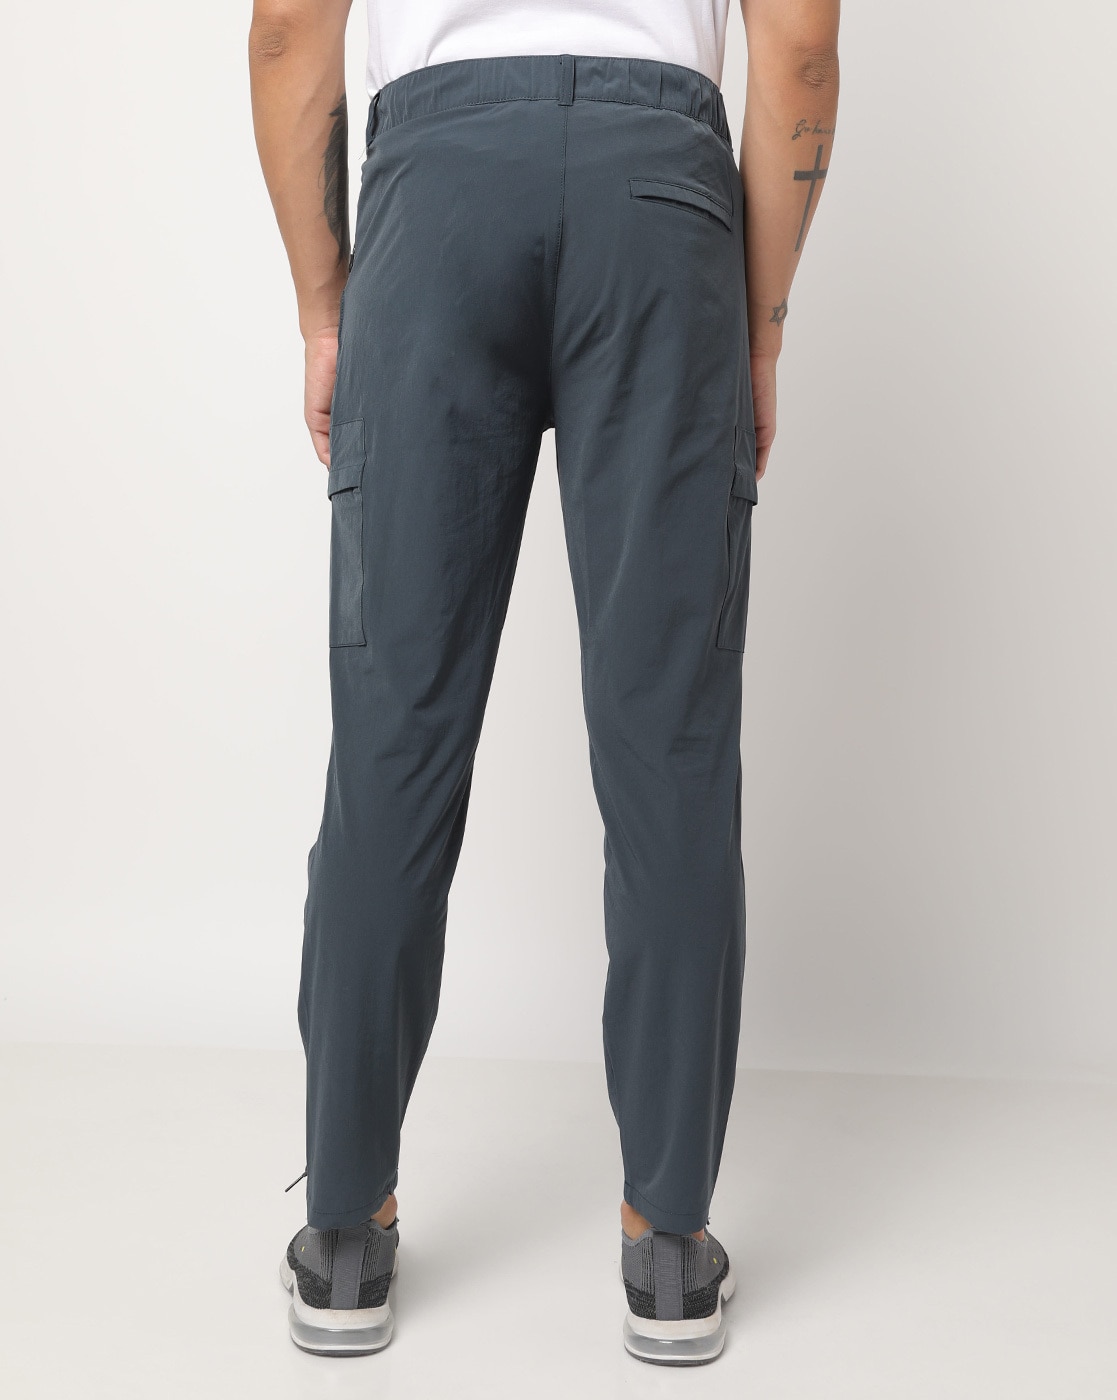 Buy Khaki Beige Track Pants for Men by Teamspirit Online | Ajio.com